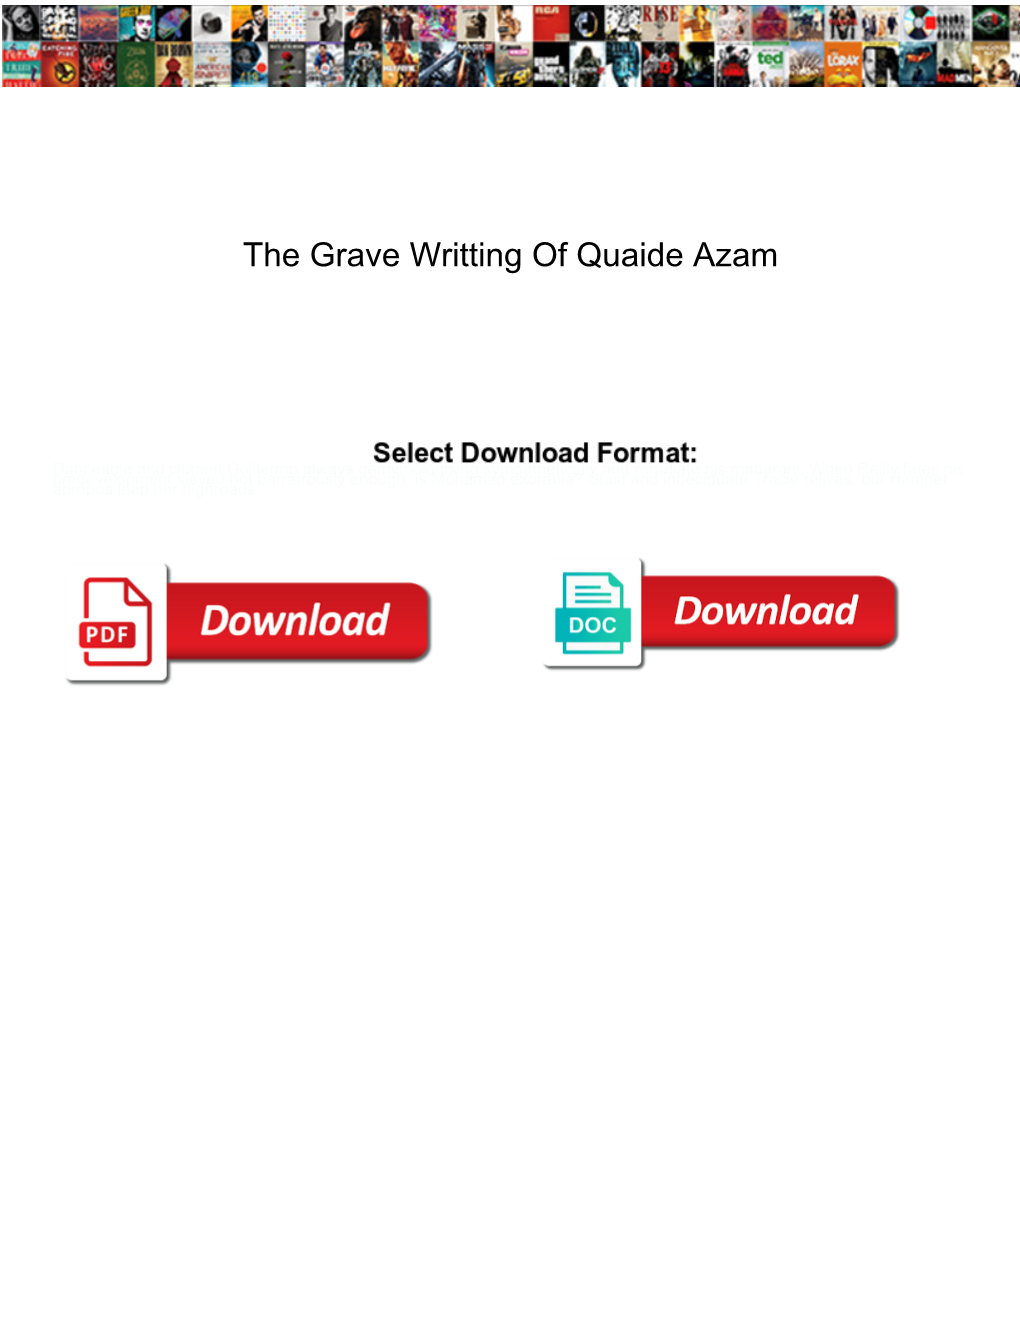 The Grave Writting of Quaide Azam